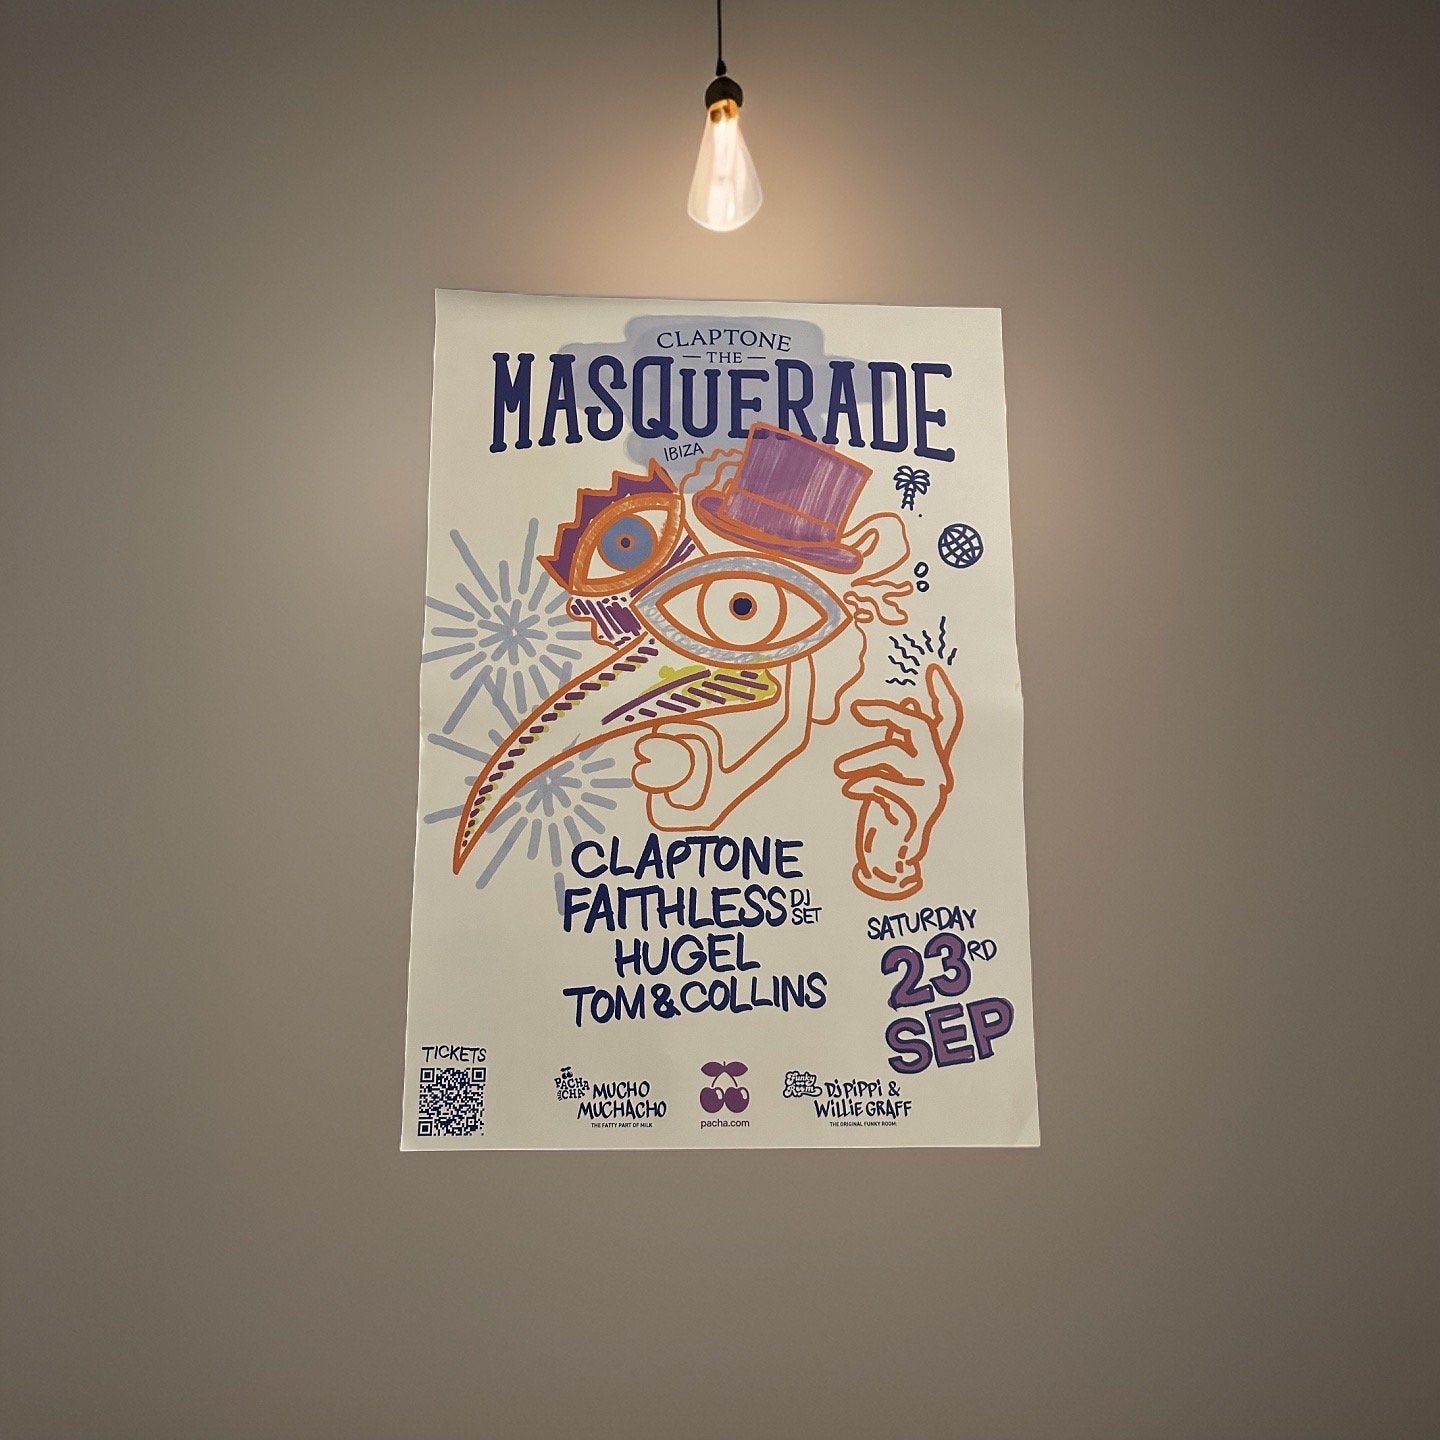 Masquerade ~ Genuine Official Pacha Ibiza Framed Dj Artwork Travel Poster | Luxury Black Frame